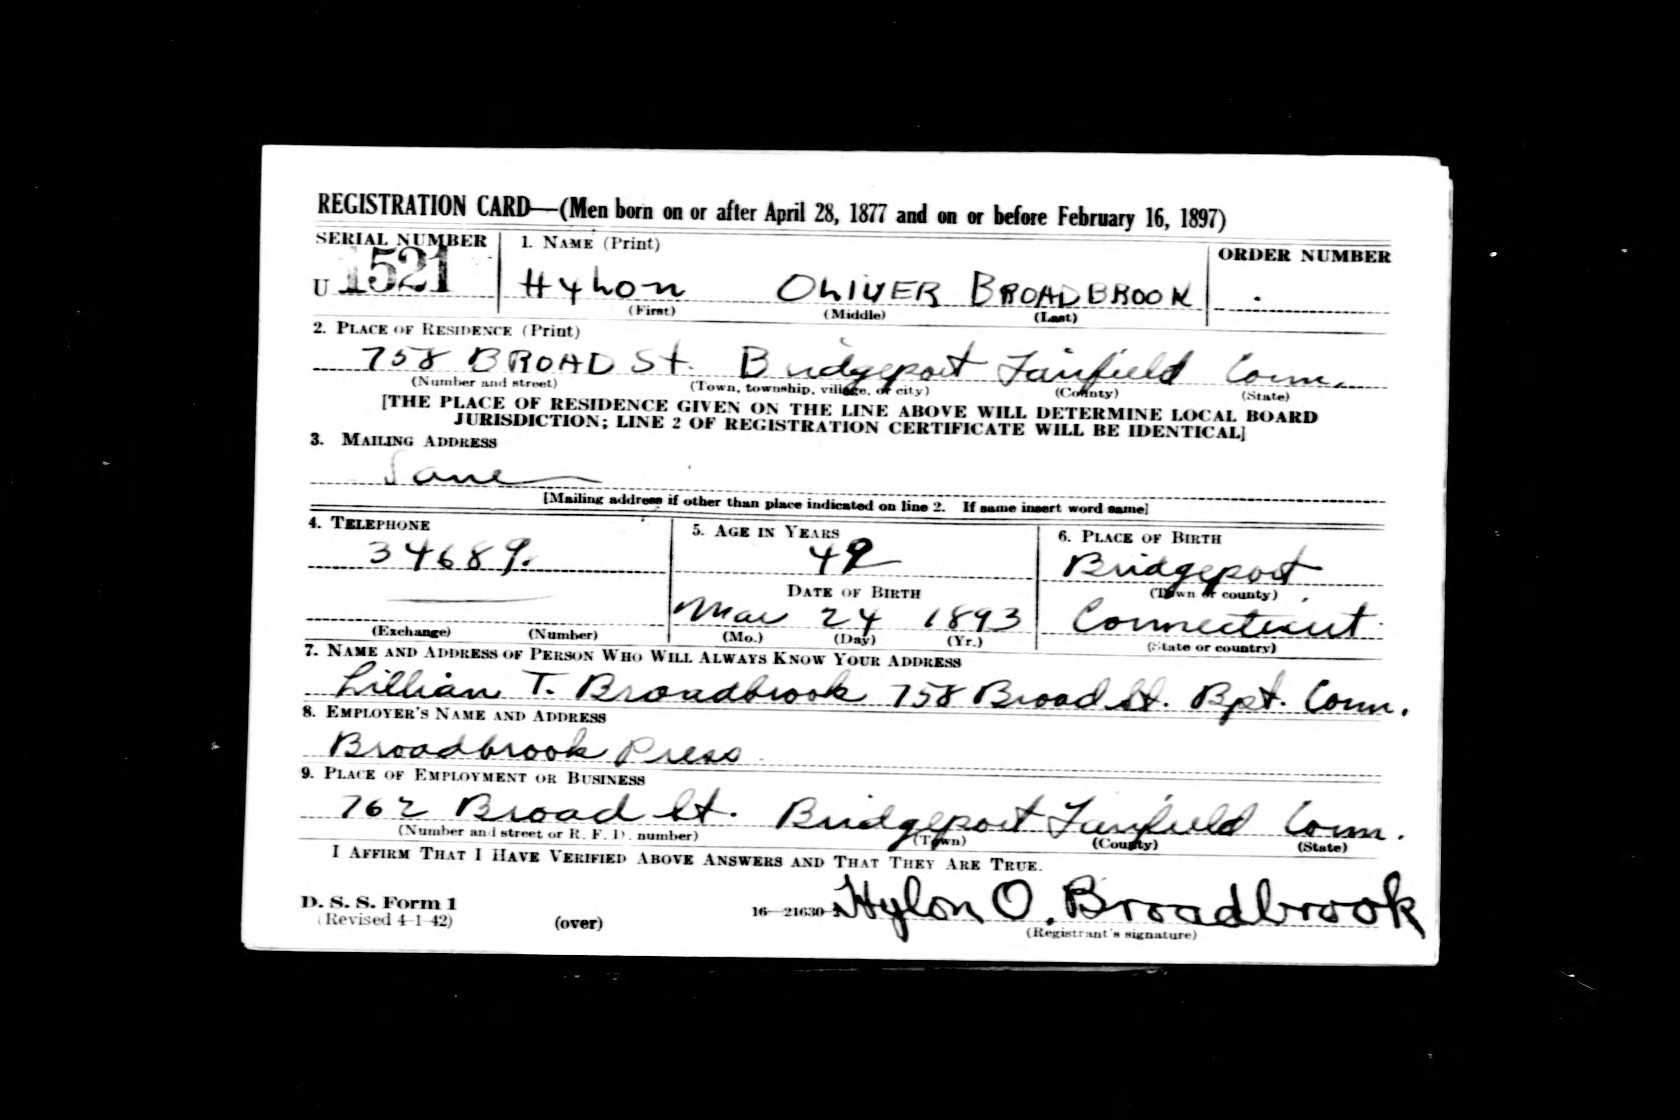 U.S., World War II Draft Registration Cards, 1942 for Hylon Broadbrook